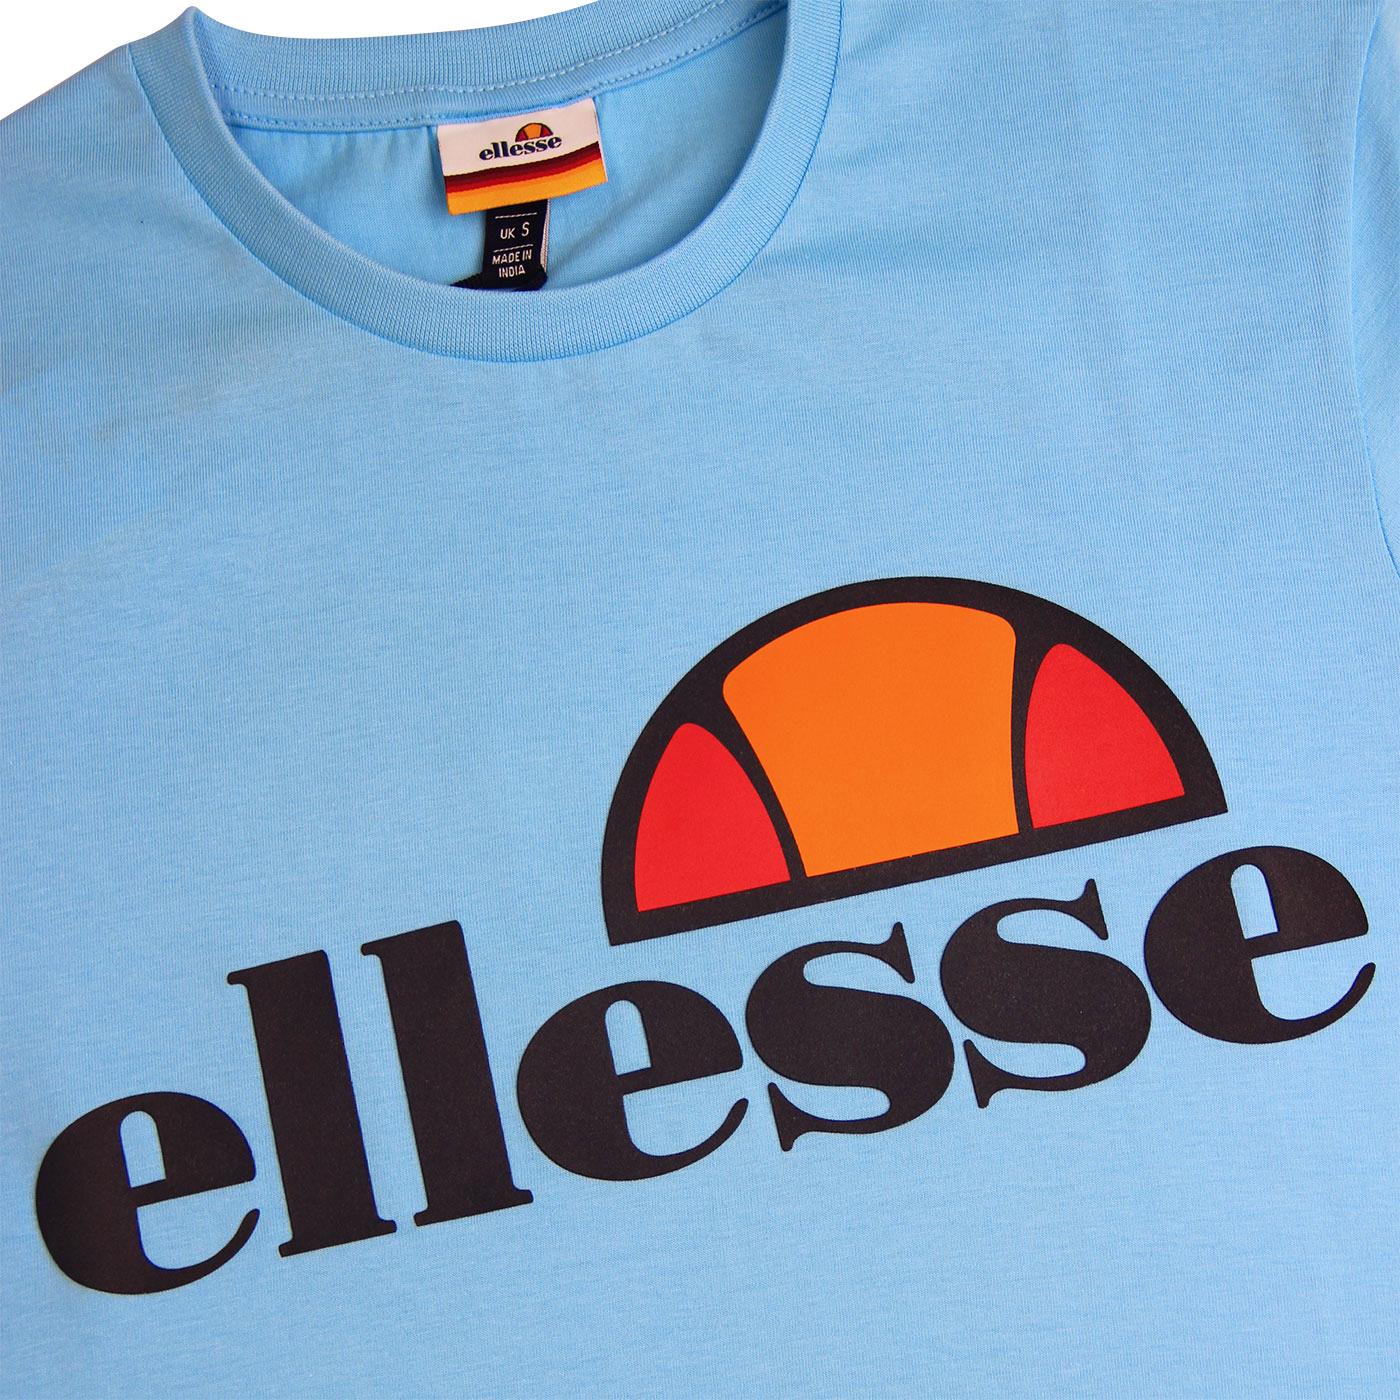 ELLESSE Prado Retro 1980s Logo Crew T-Shirt in Light Blue